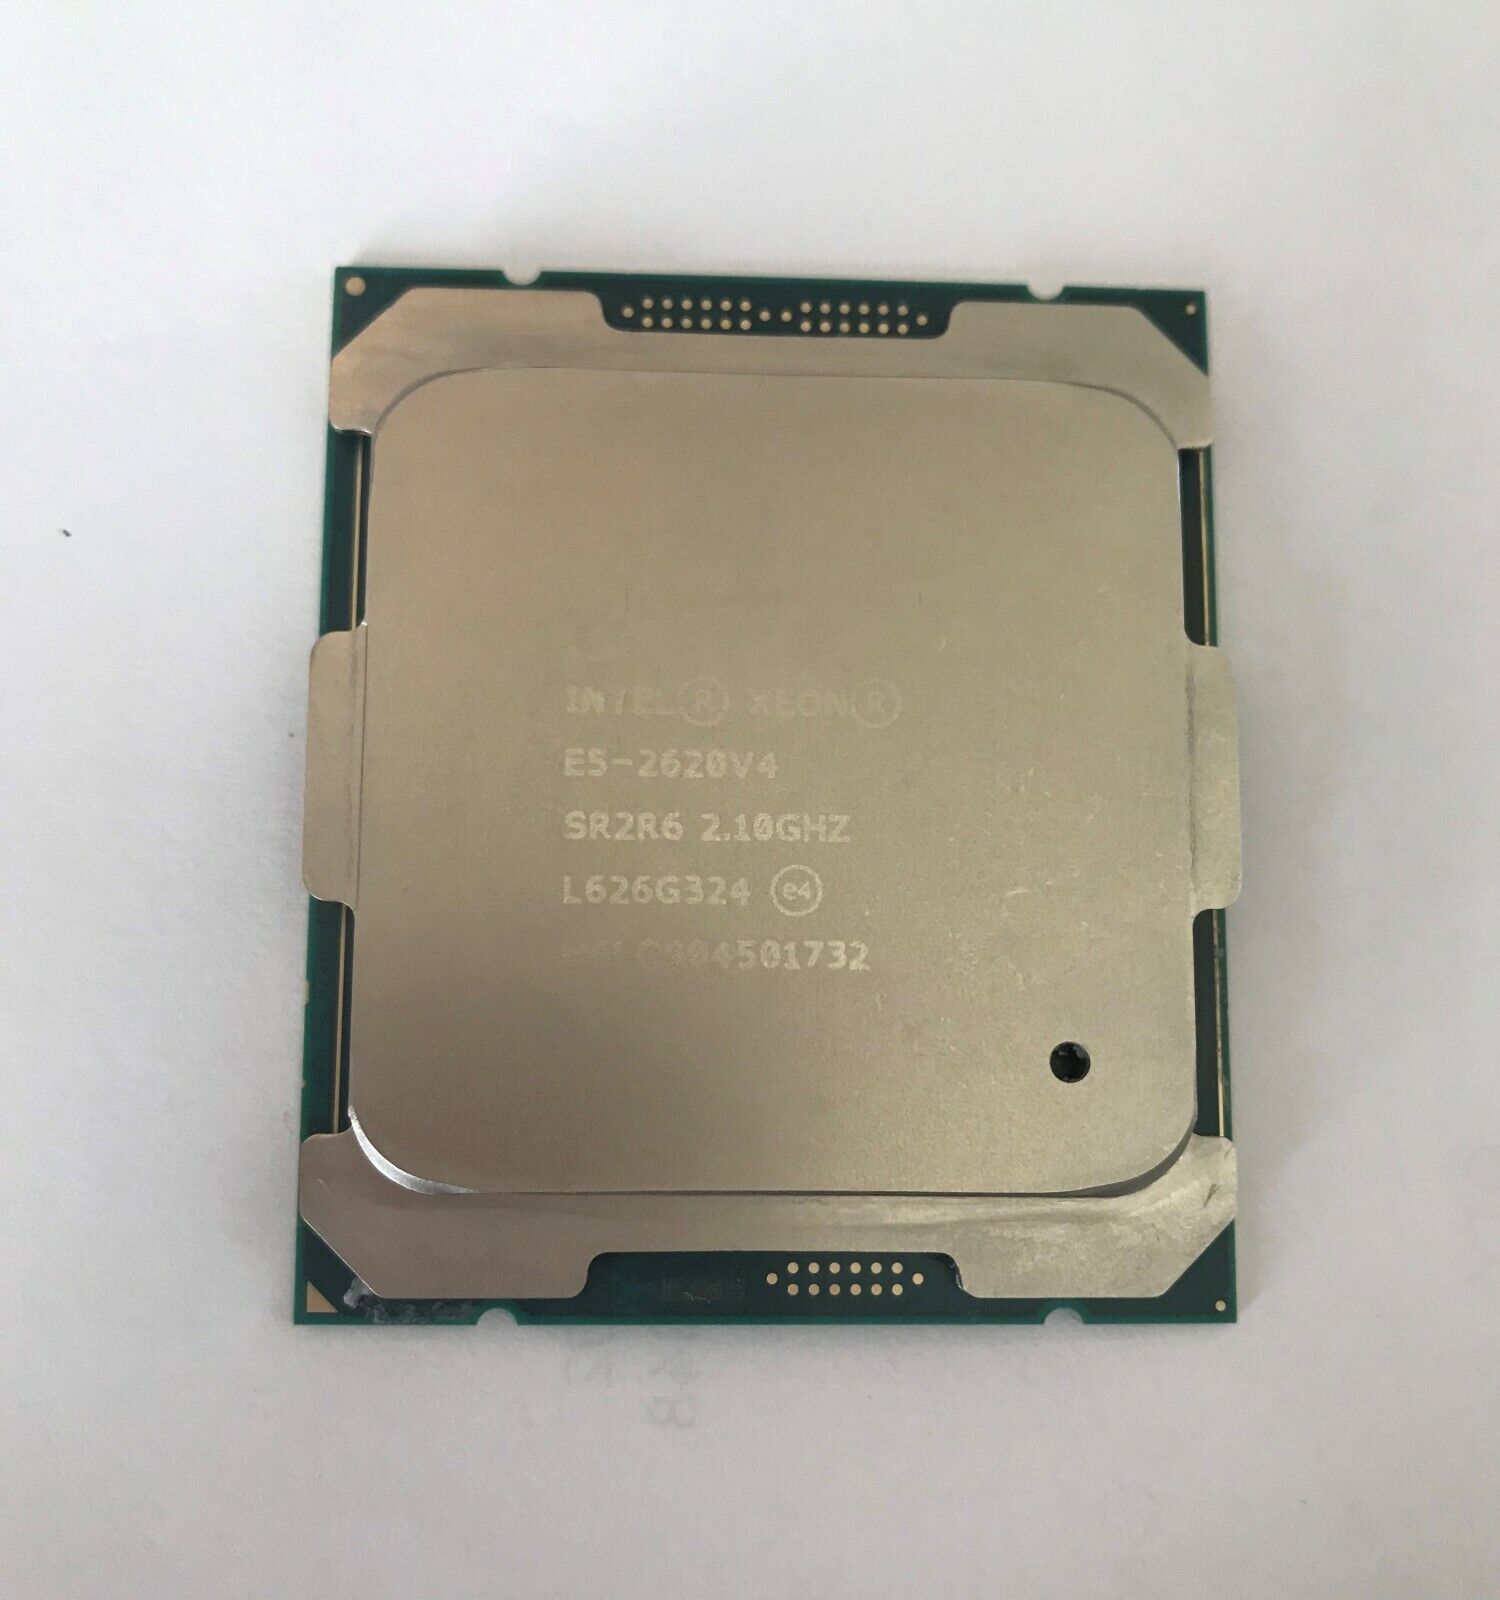 Intel SR2R6 Xeon E5-2620 v4 LGA 2011/Socket R 2.1GHz Server CPU - $50.99